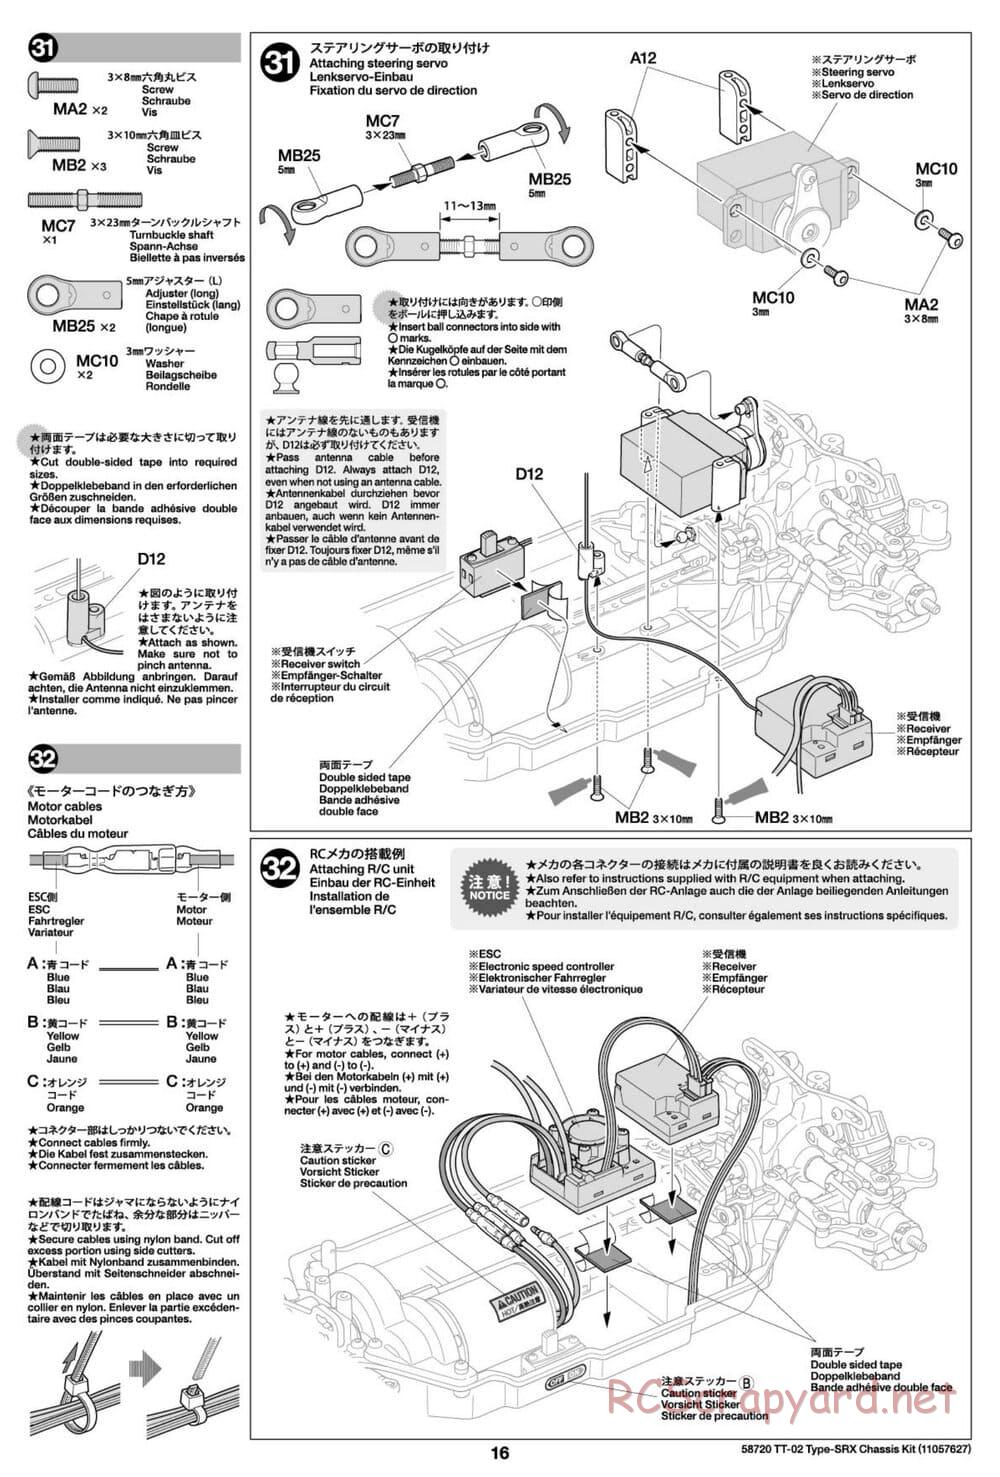 Tamiya - TT-02 Type-SRX Chassis - Manual - Page 16